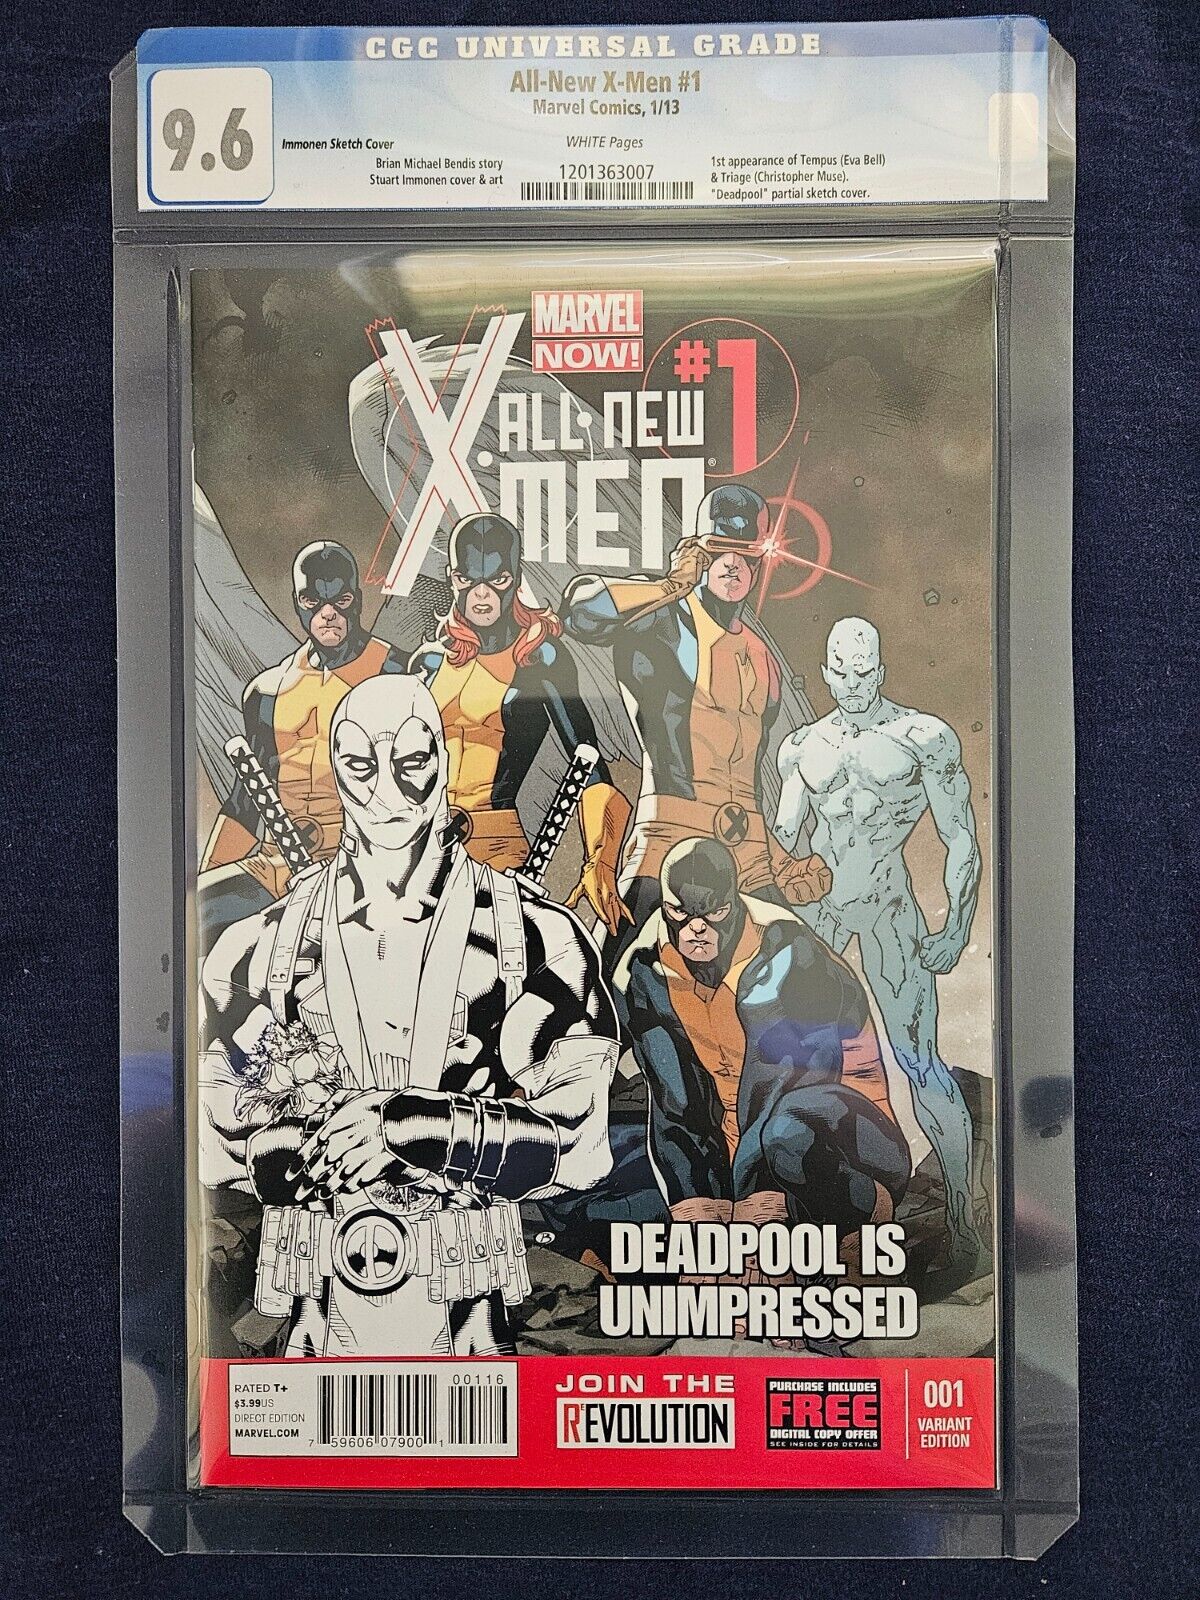 All-New X-Men #1 Immonen Deadpool sketch cover. CGC 9.6 sealed needs new holder